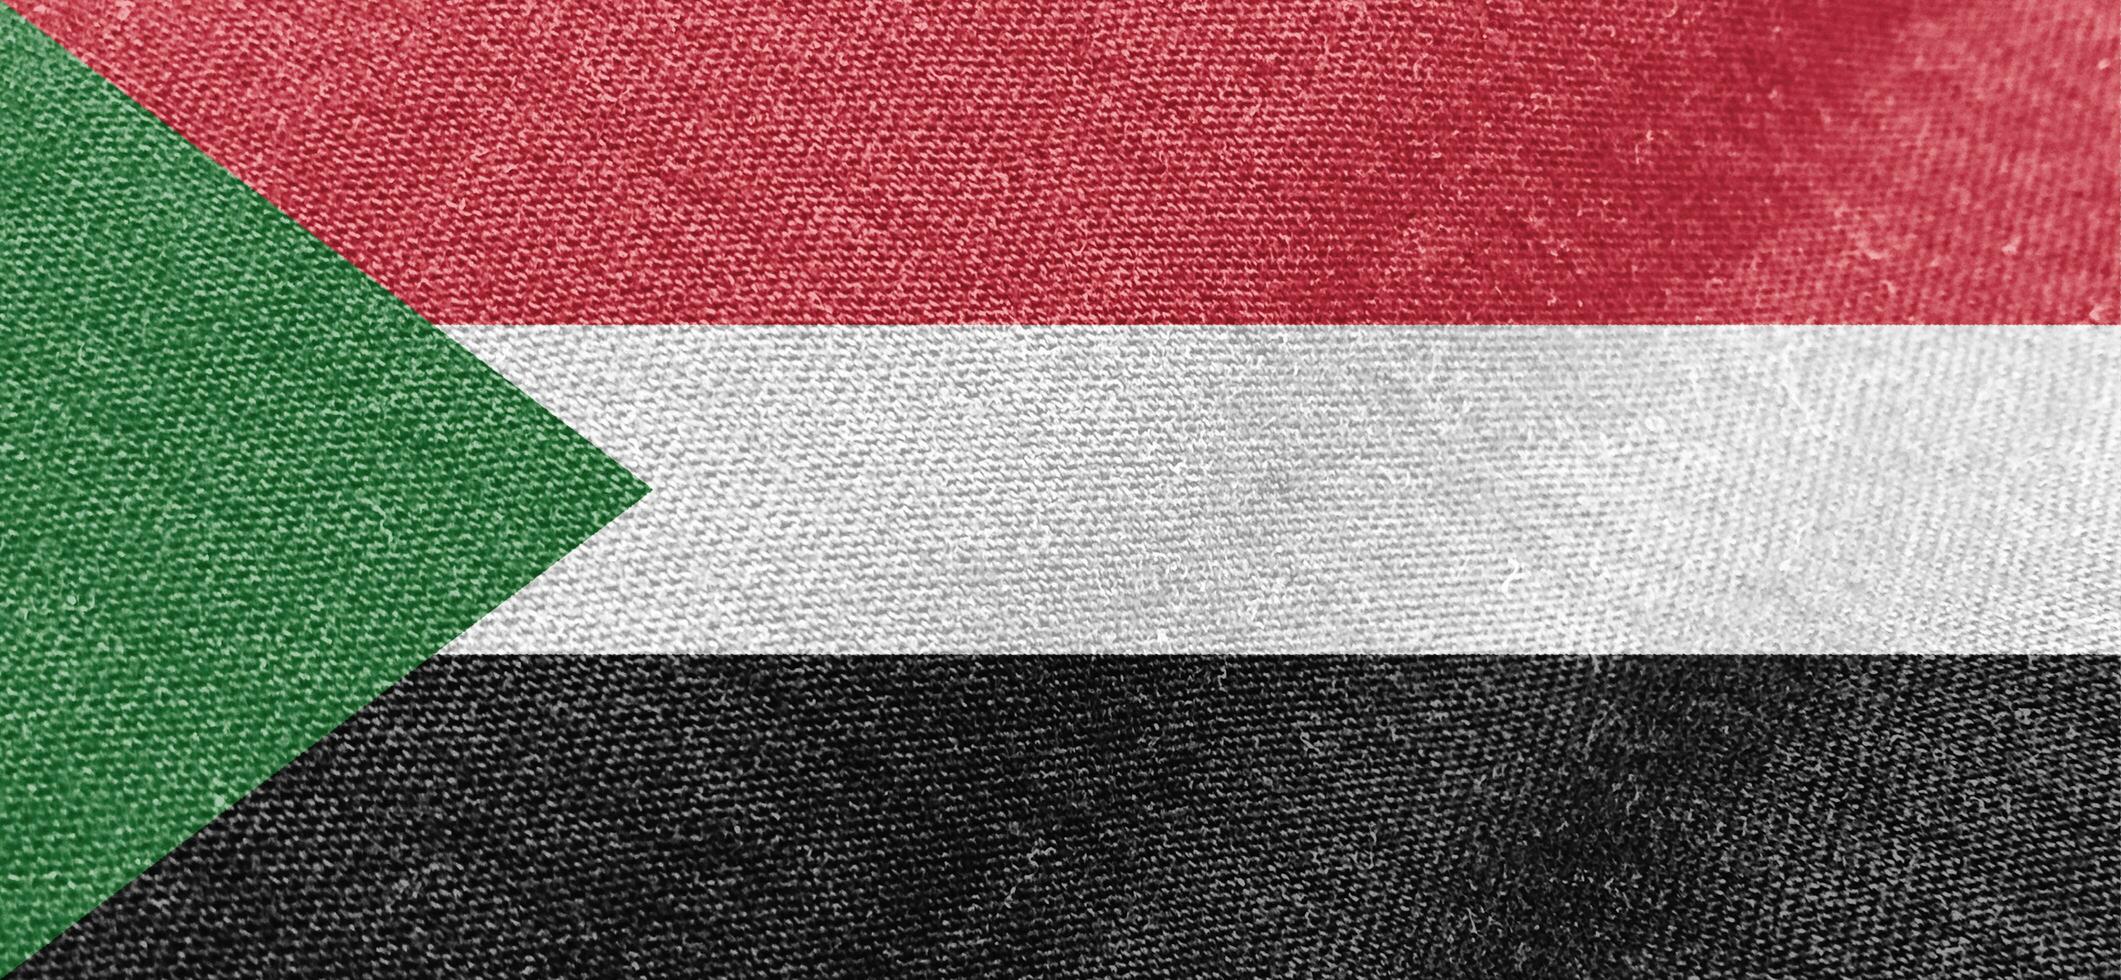 Soedan vlag kleding stof katoen materiaal breed vlag behang foto